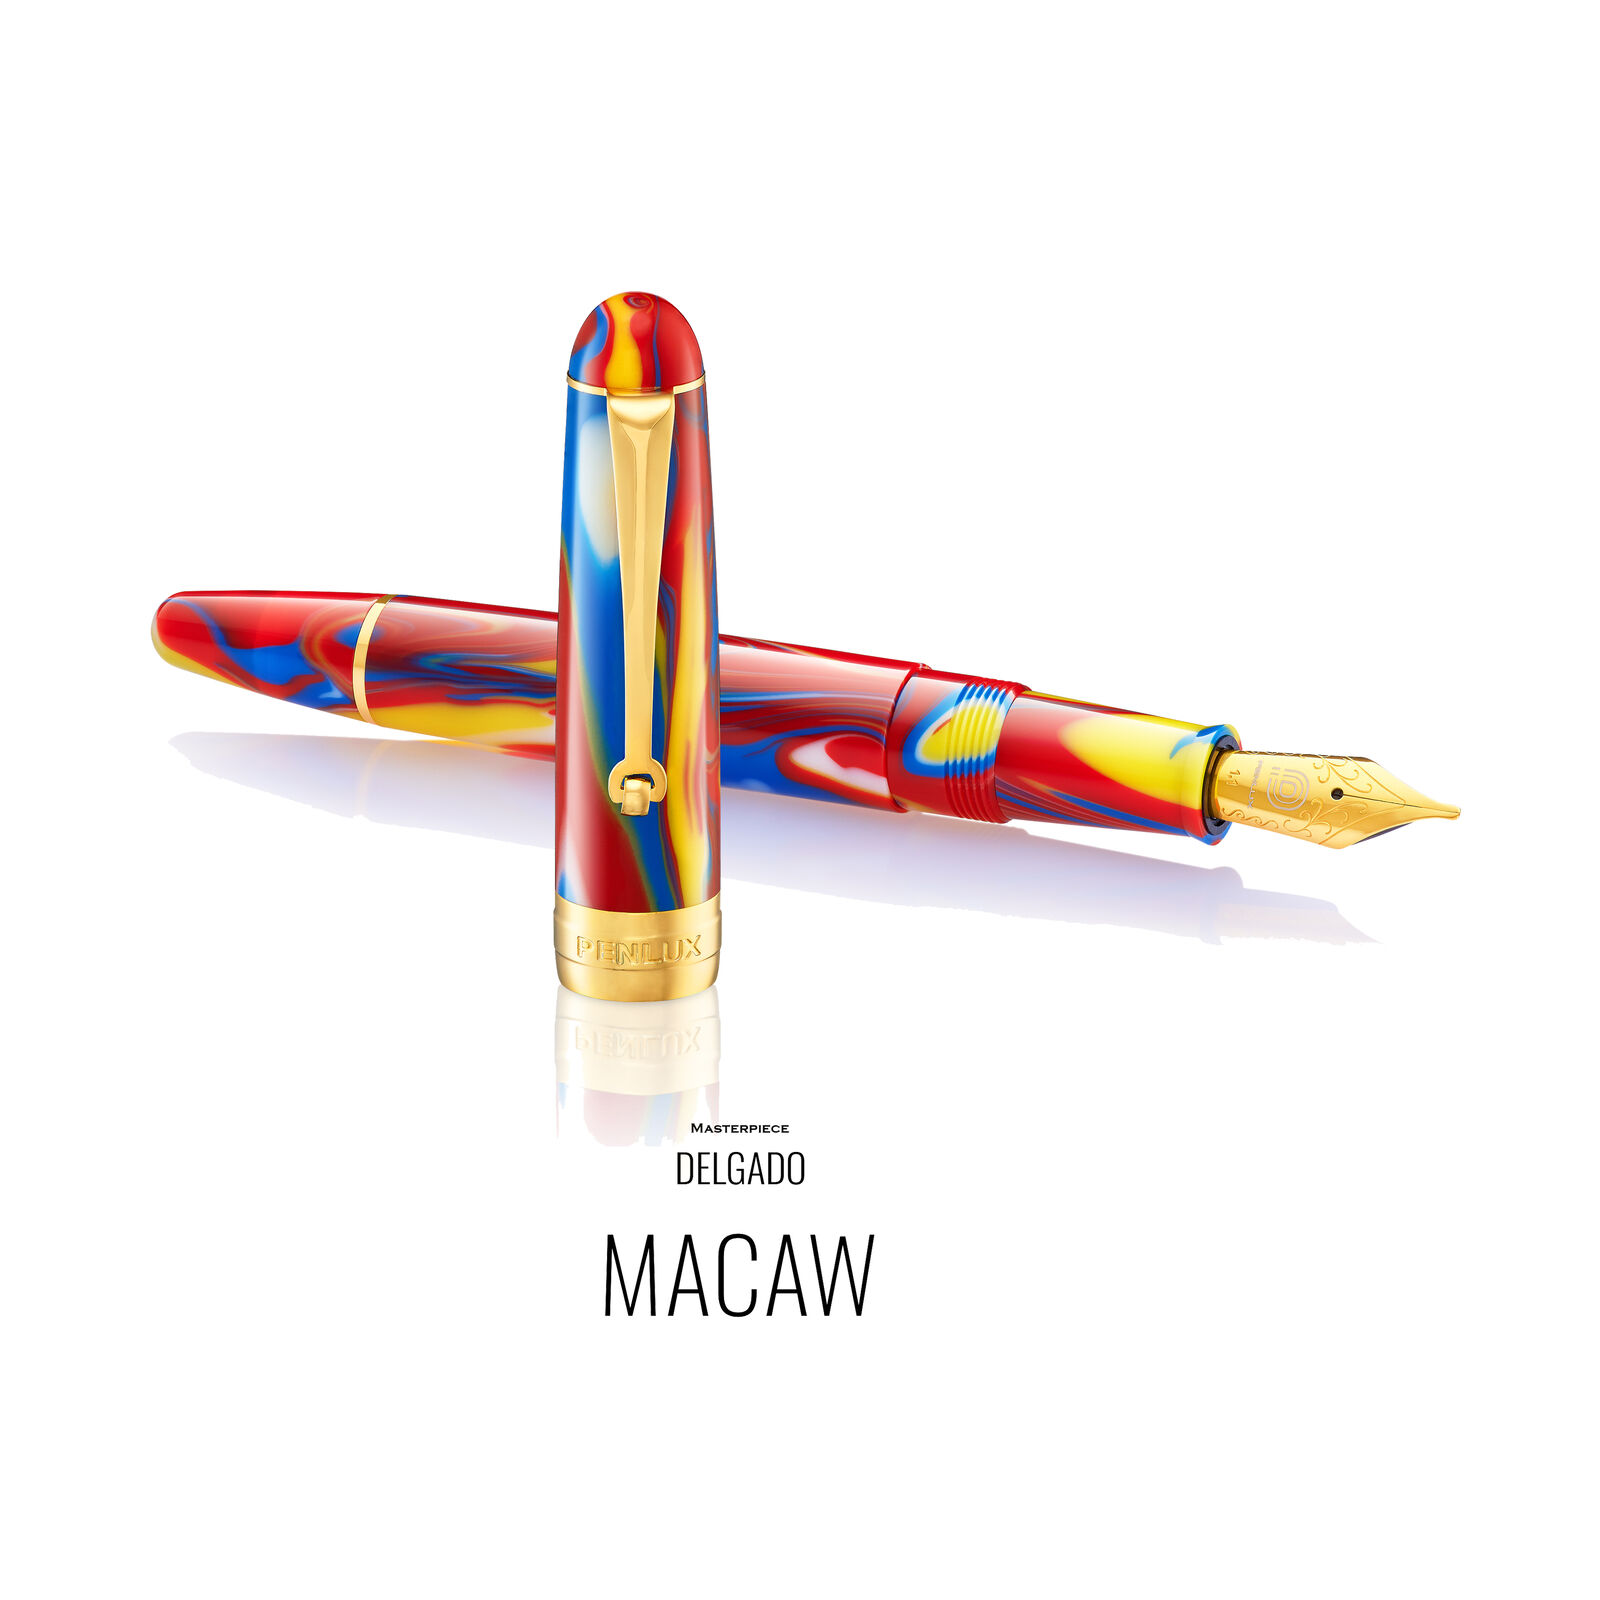 Penlux Masterpiece Delgado Fountain Pen in Macaw - Broad Point- NEW in Box